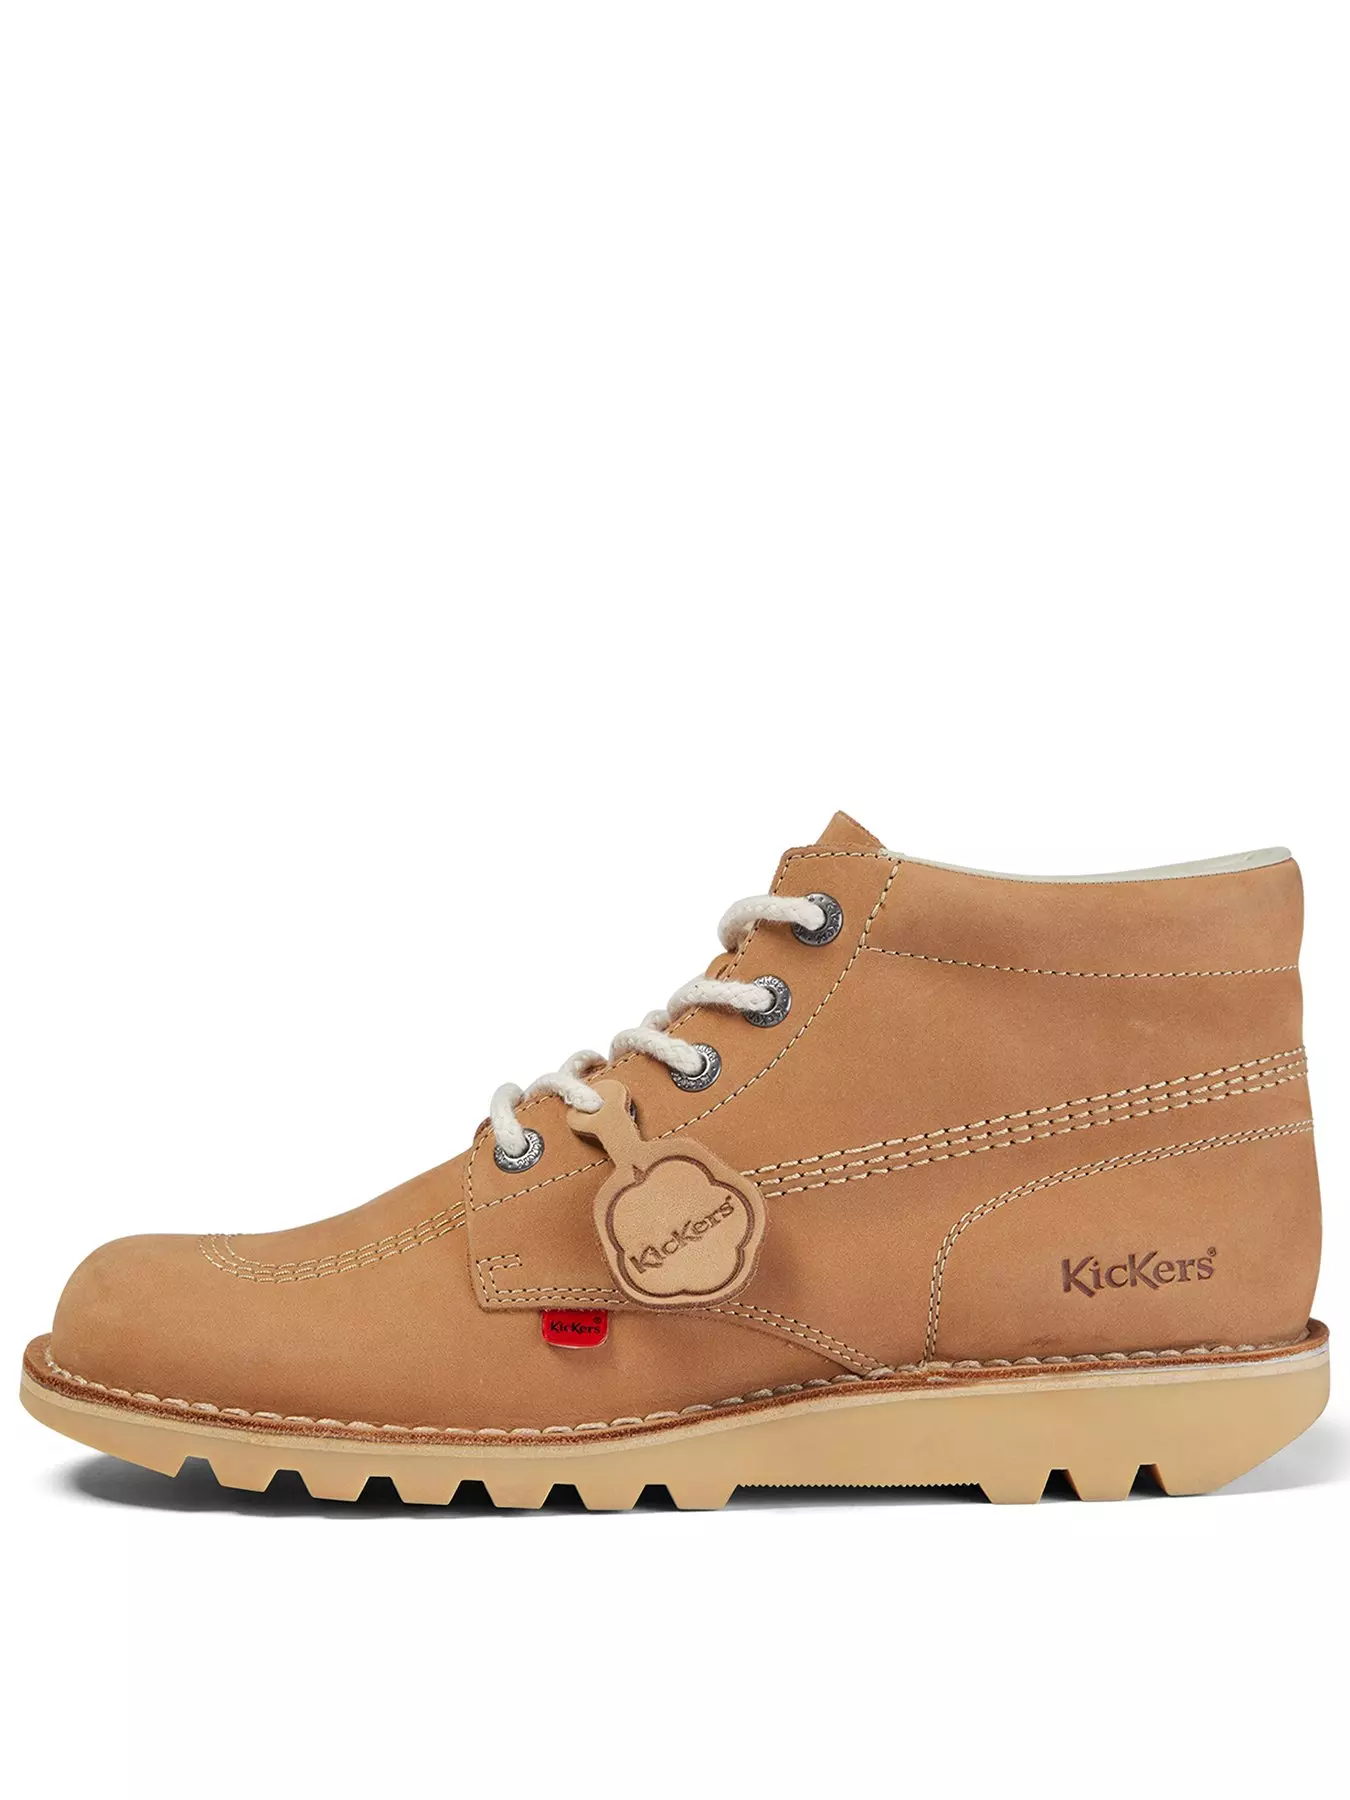 Kickers Shoes | Kickers Very.co.uk